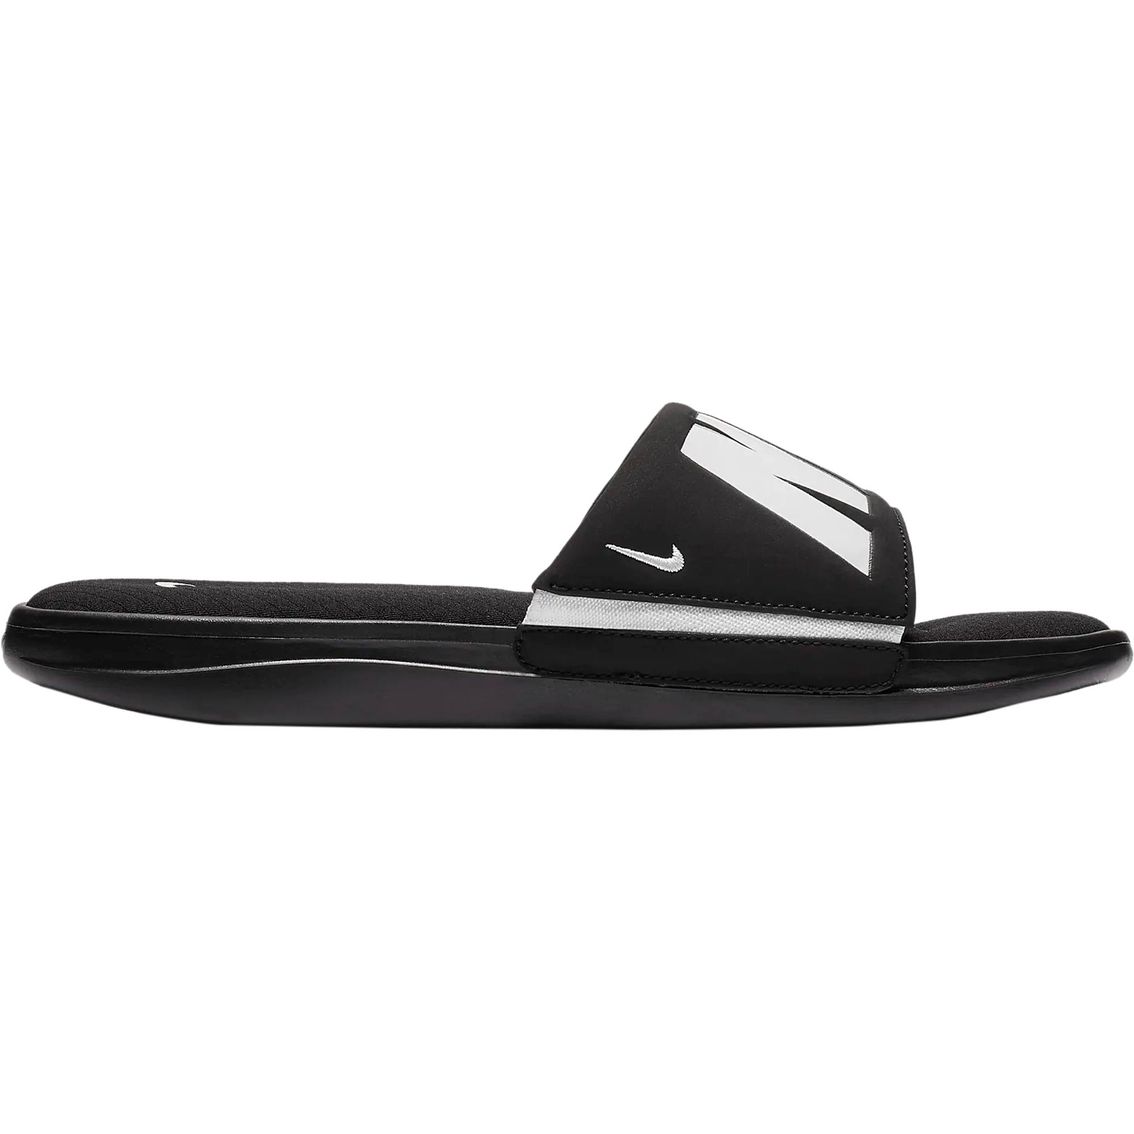 Sandalia Nike Ultra Comfort 3 Slide Masculino - Preto e Branco